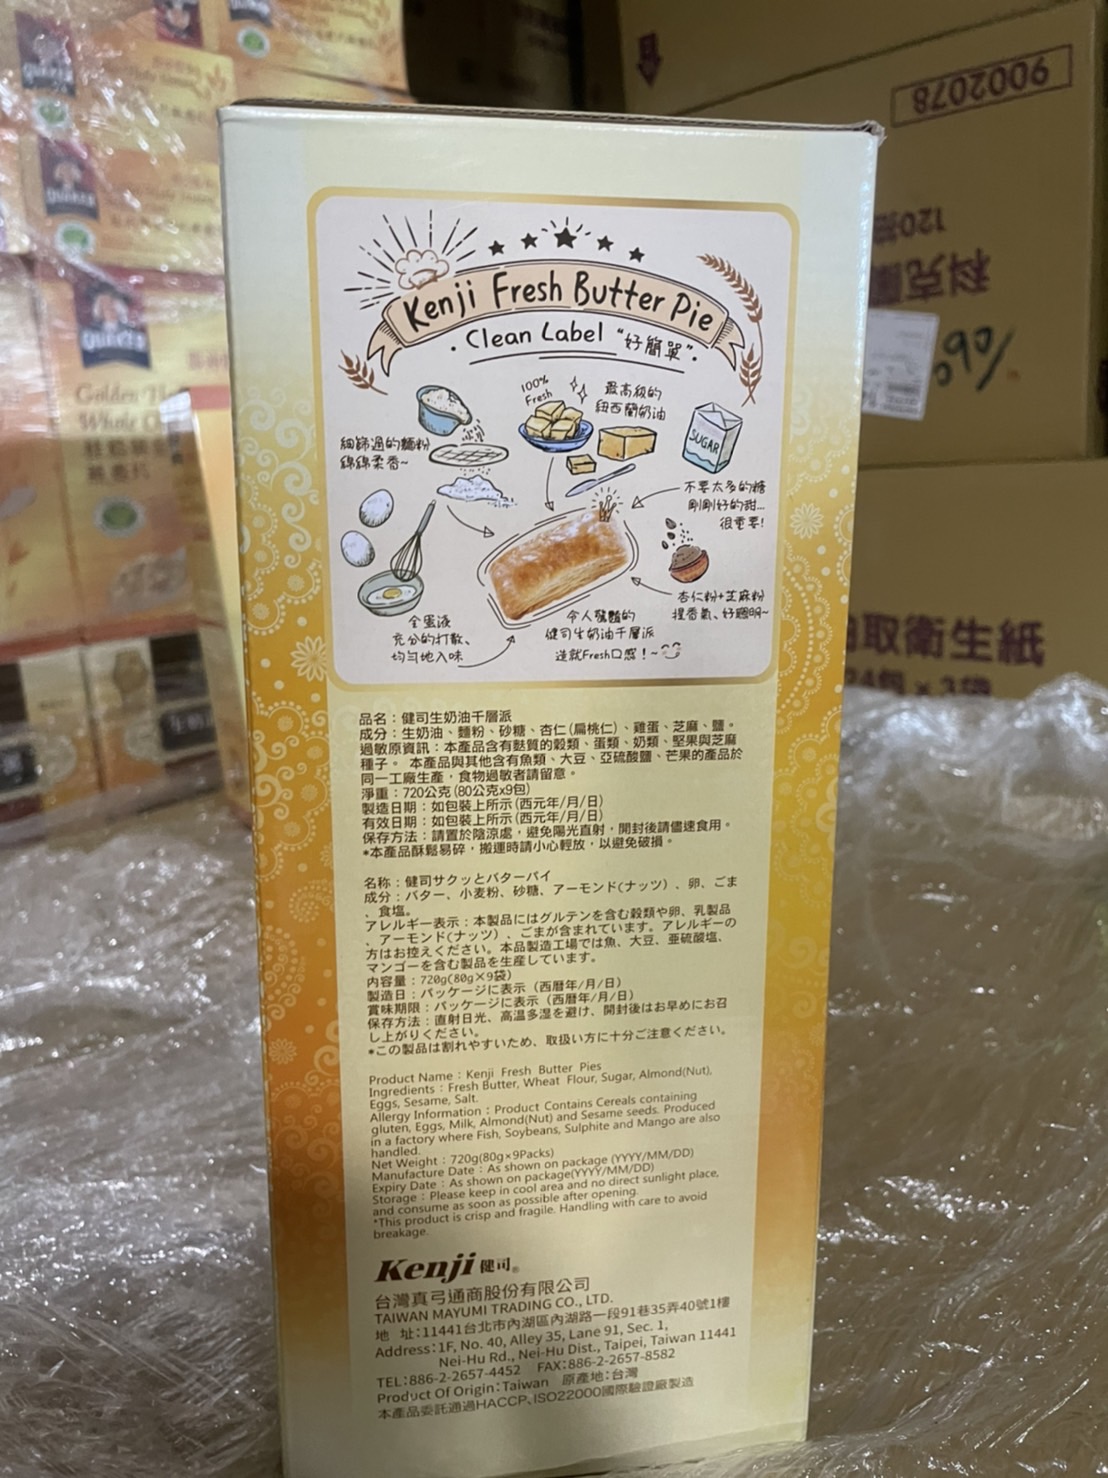 【Kenji 健司】生奶油千層派禮盒(80g*9包/盒) 口感酥脆 甜而不膩